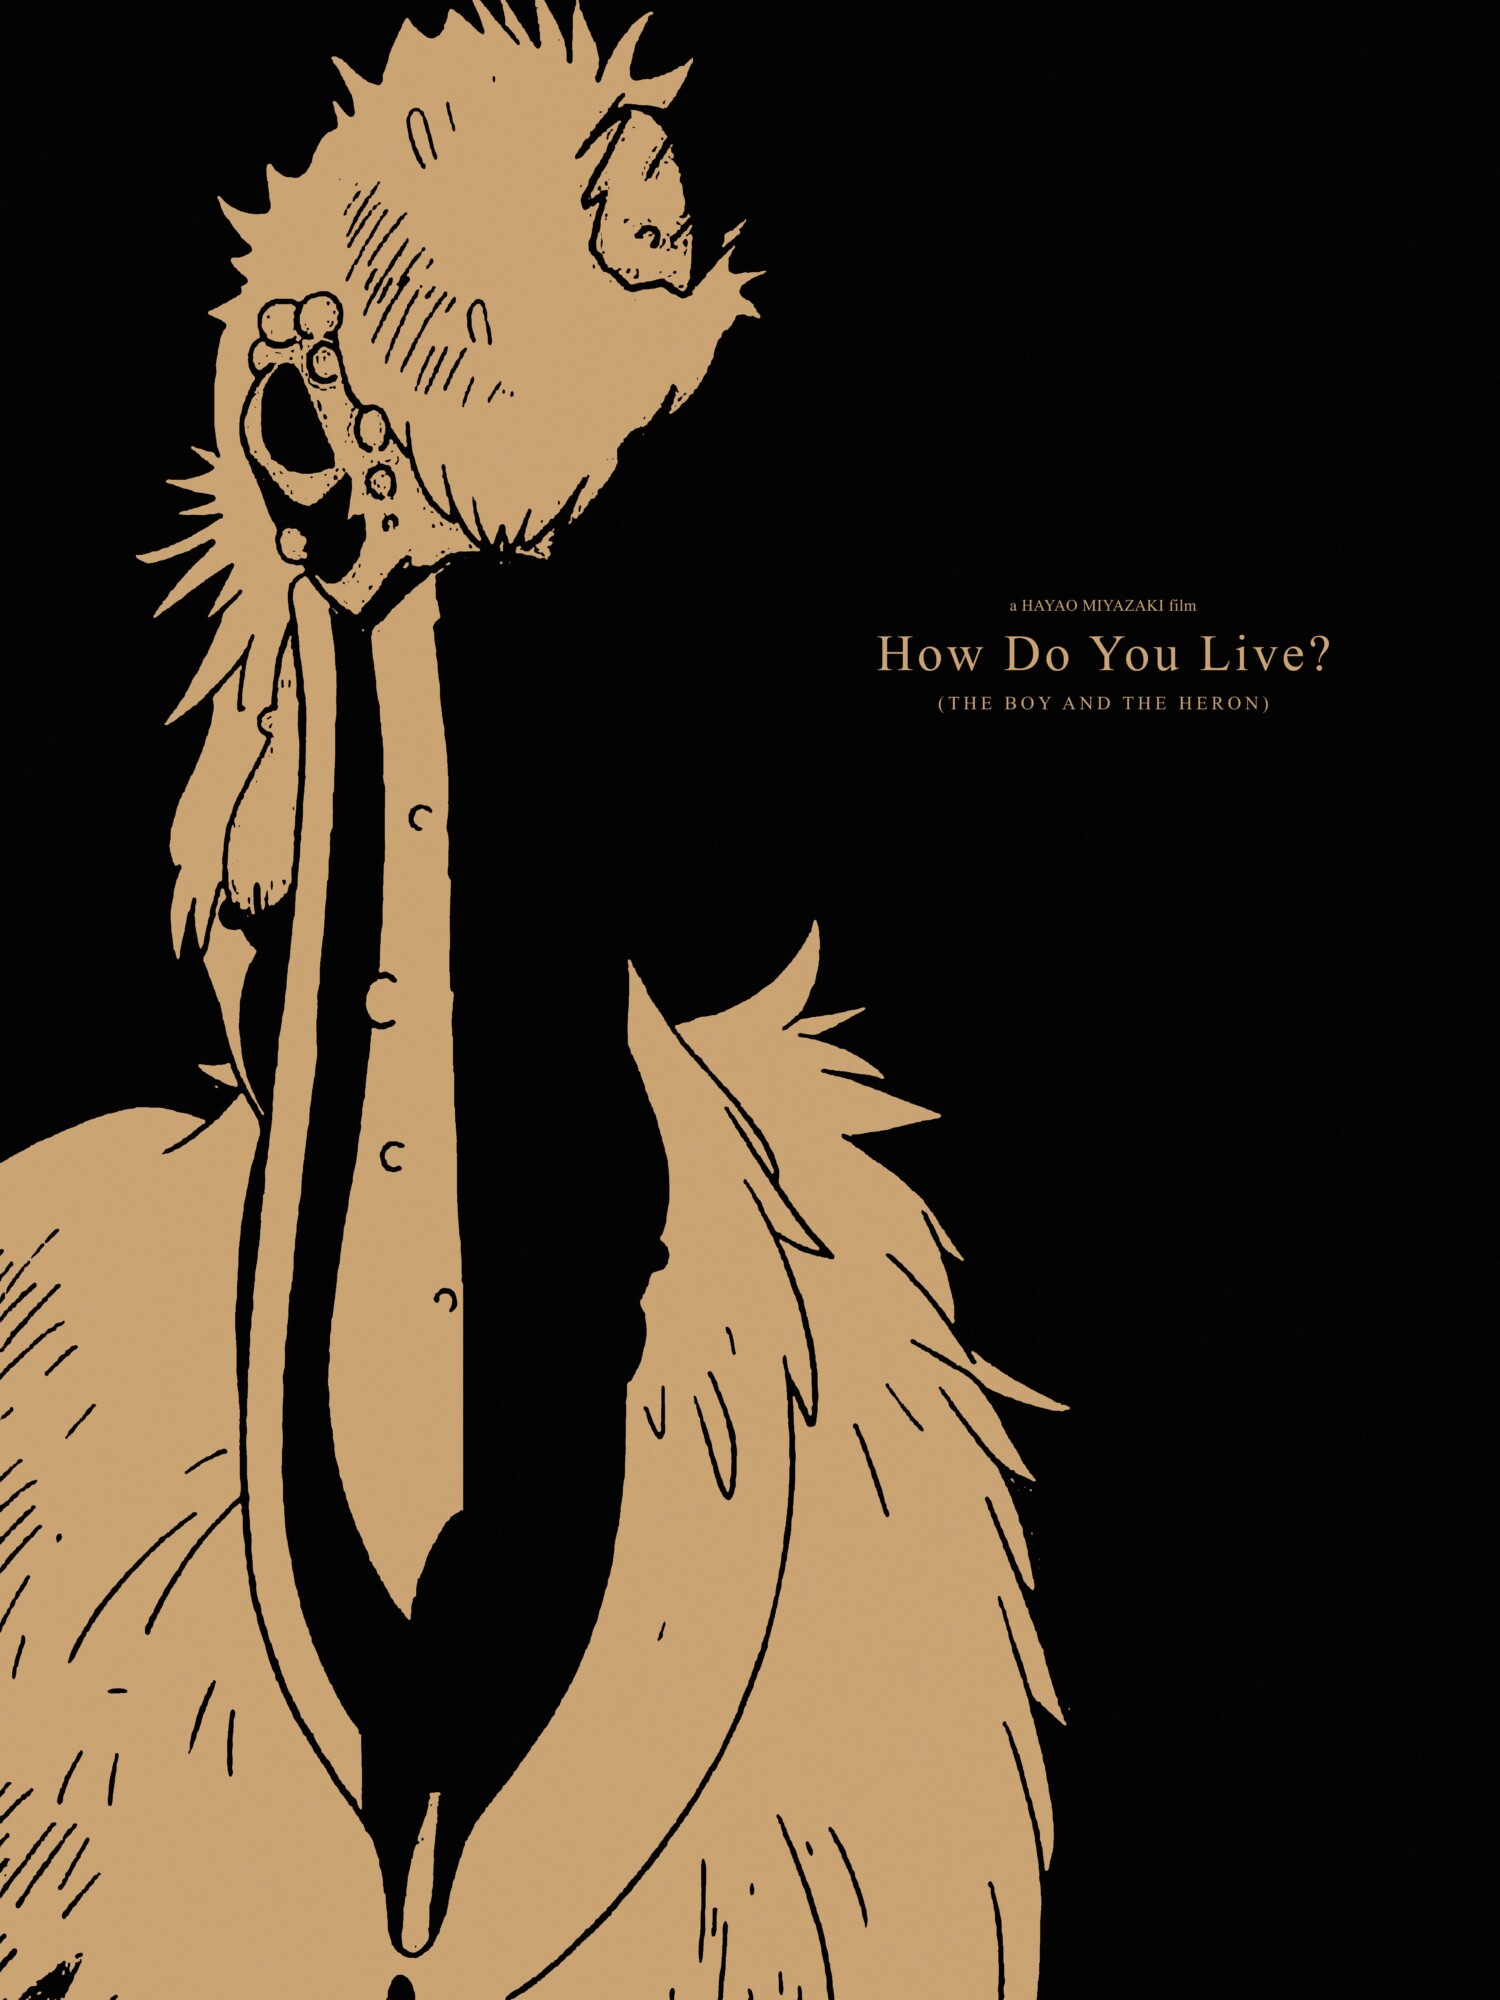 The Boy and The Heron (How Do You Live?) (2023) – Dir. Hayao Miyazaki – Studio Ghibli – Academy Award Winner.